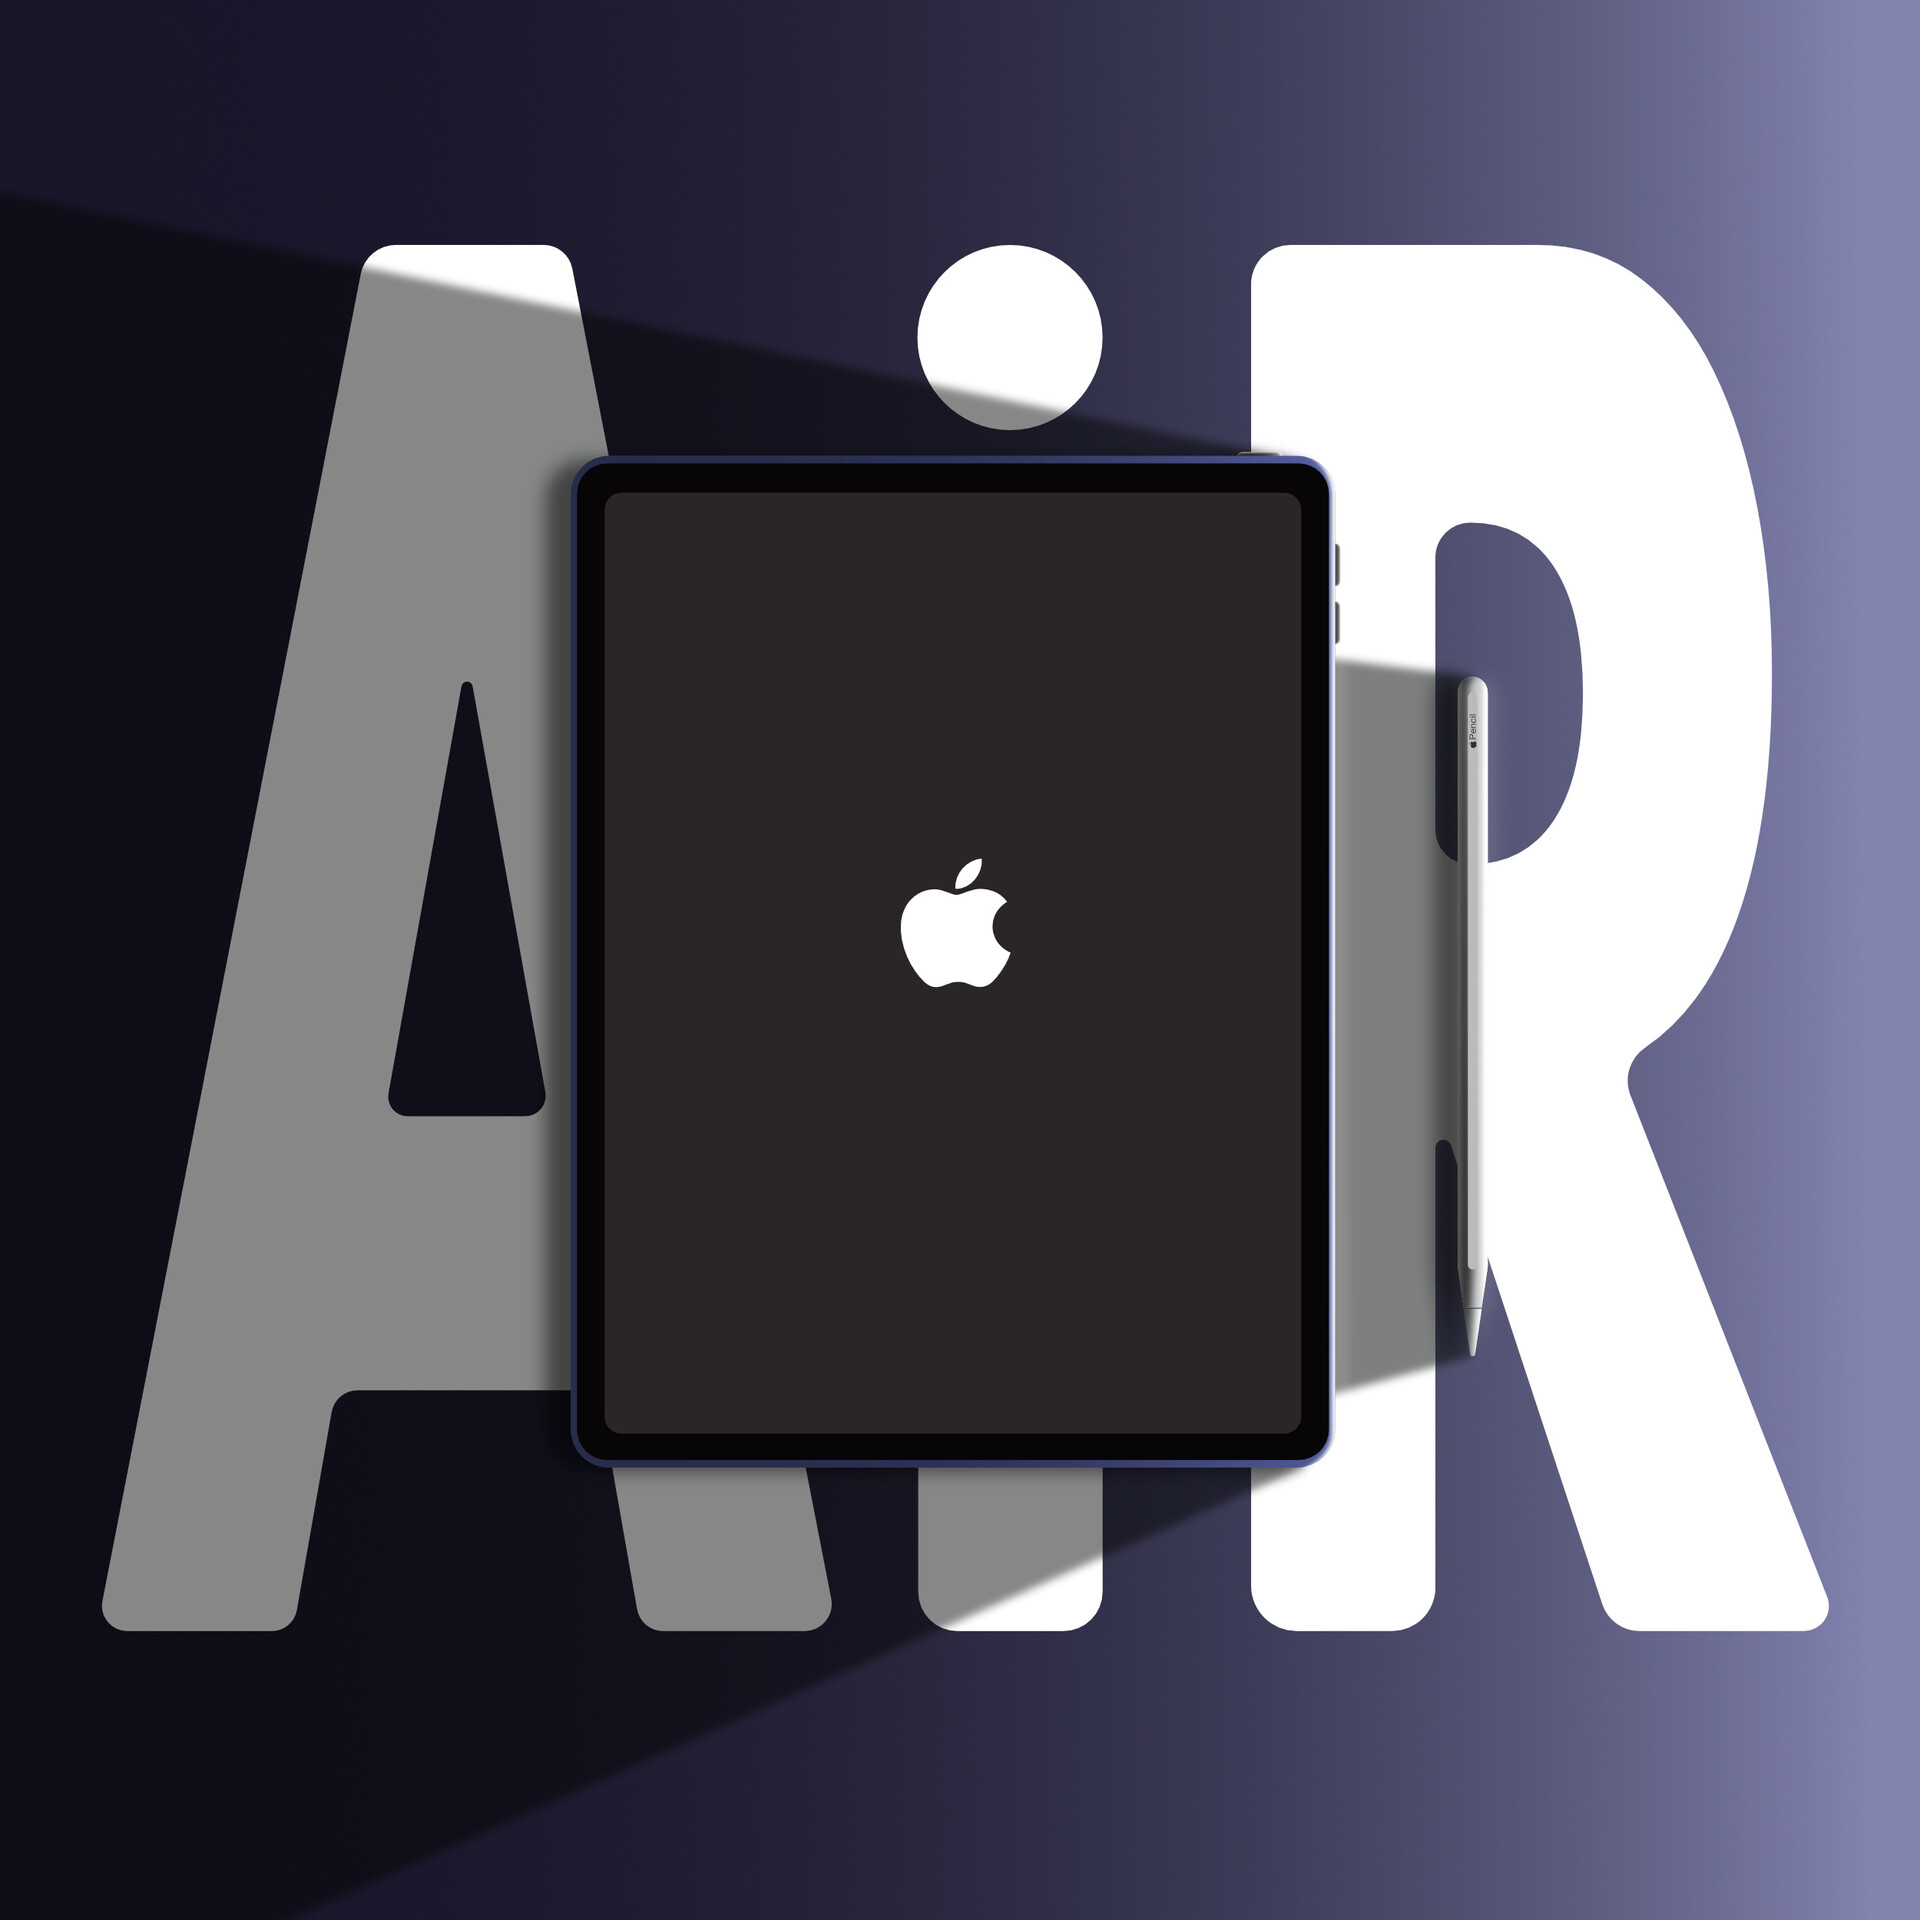 ArtStation - New iPad Air